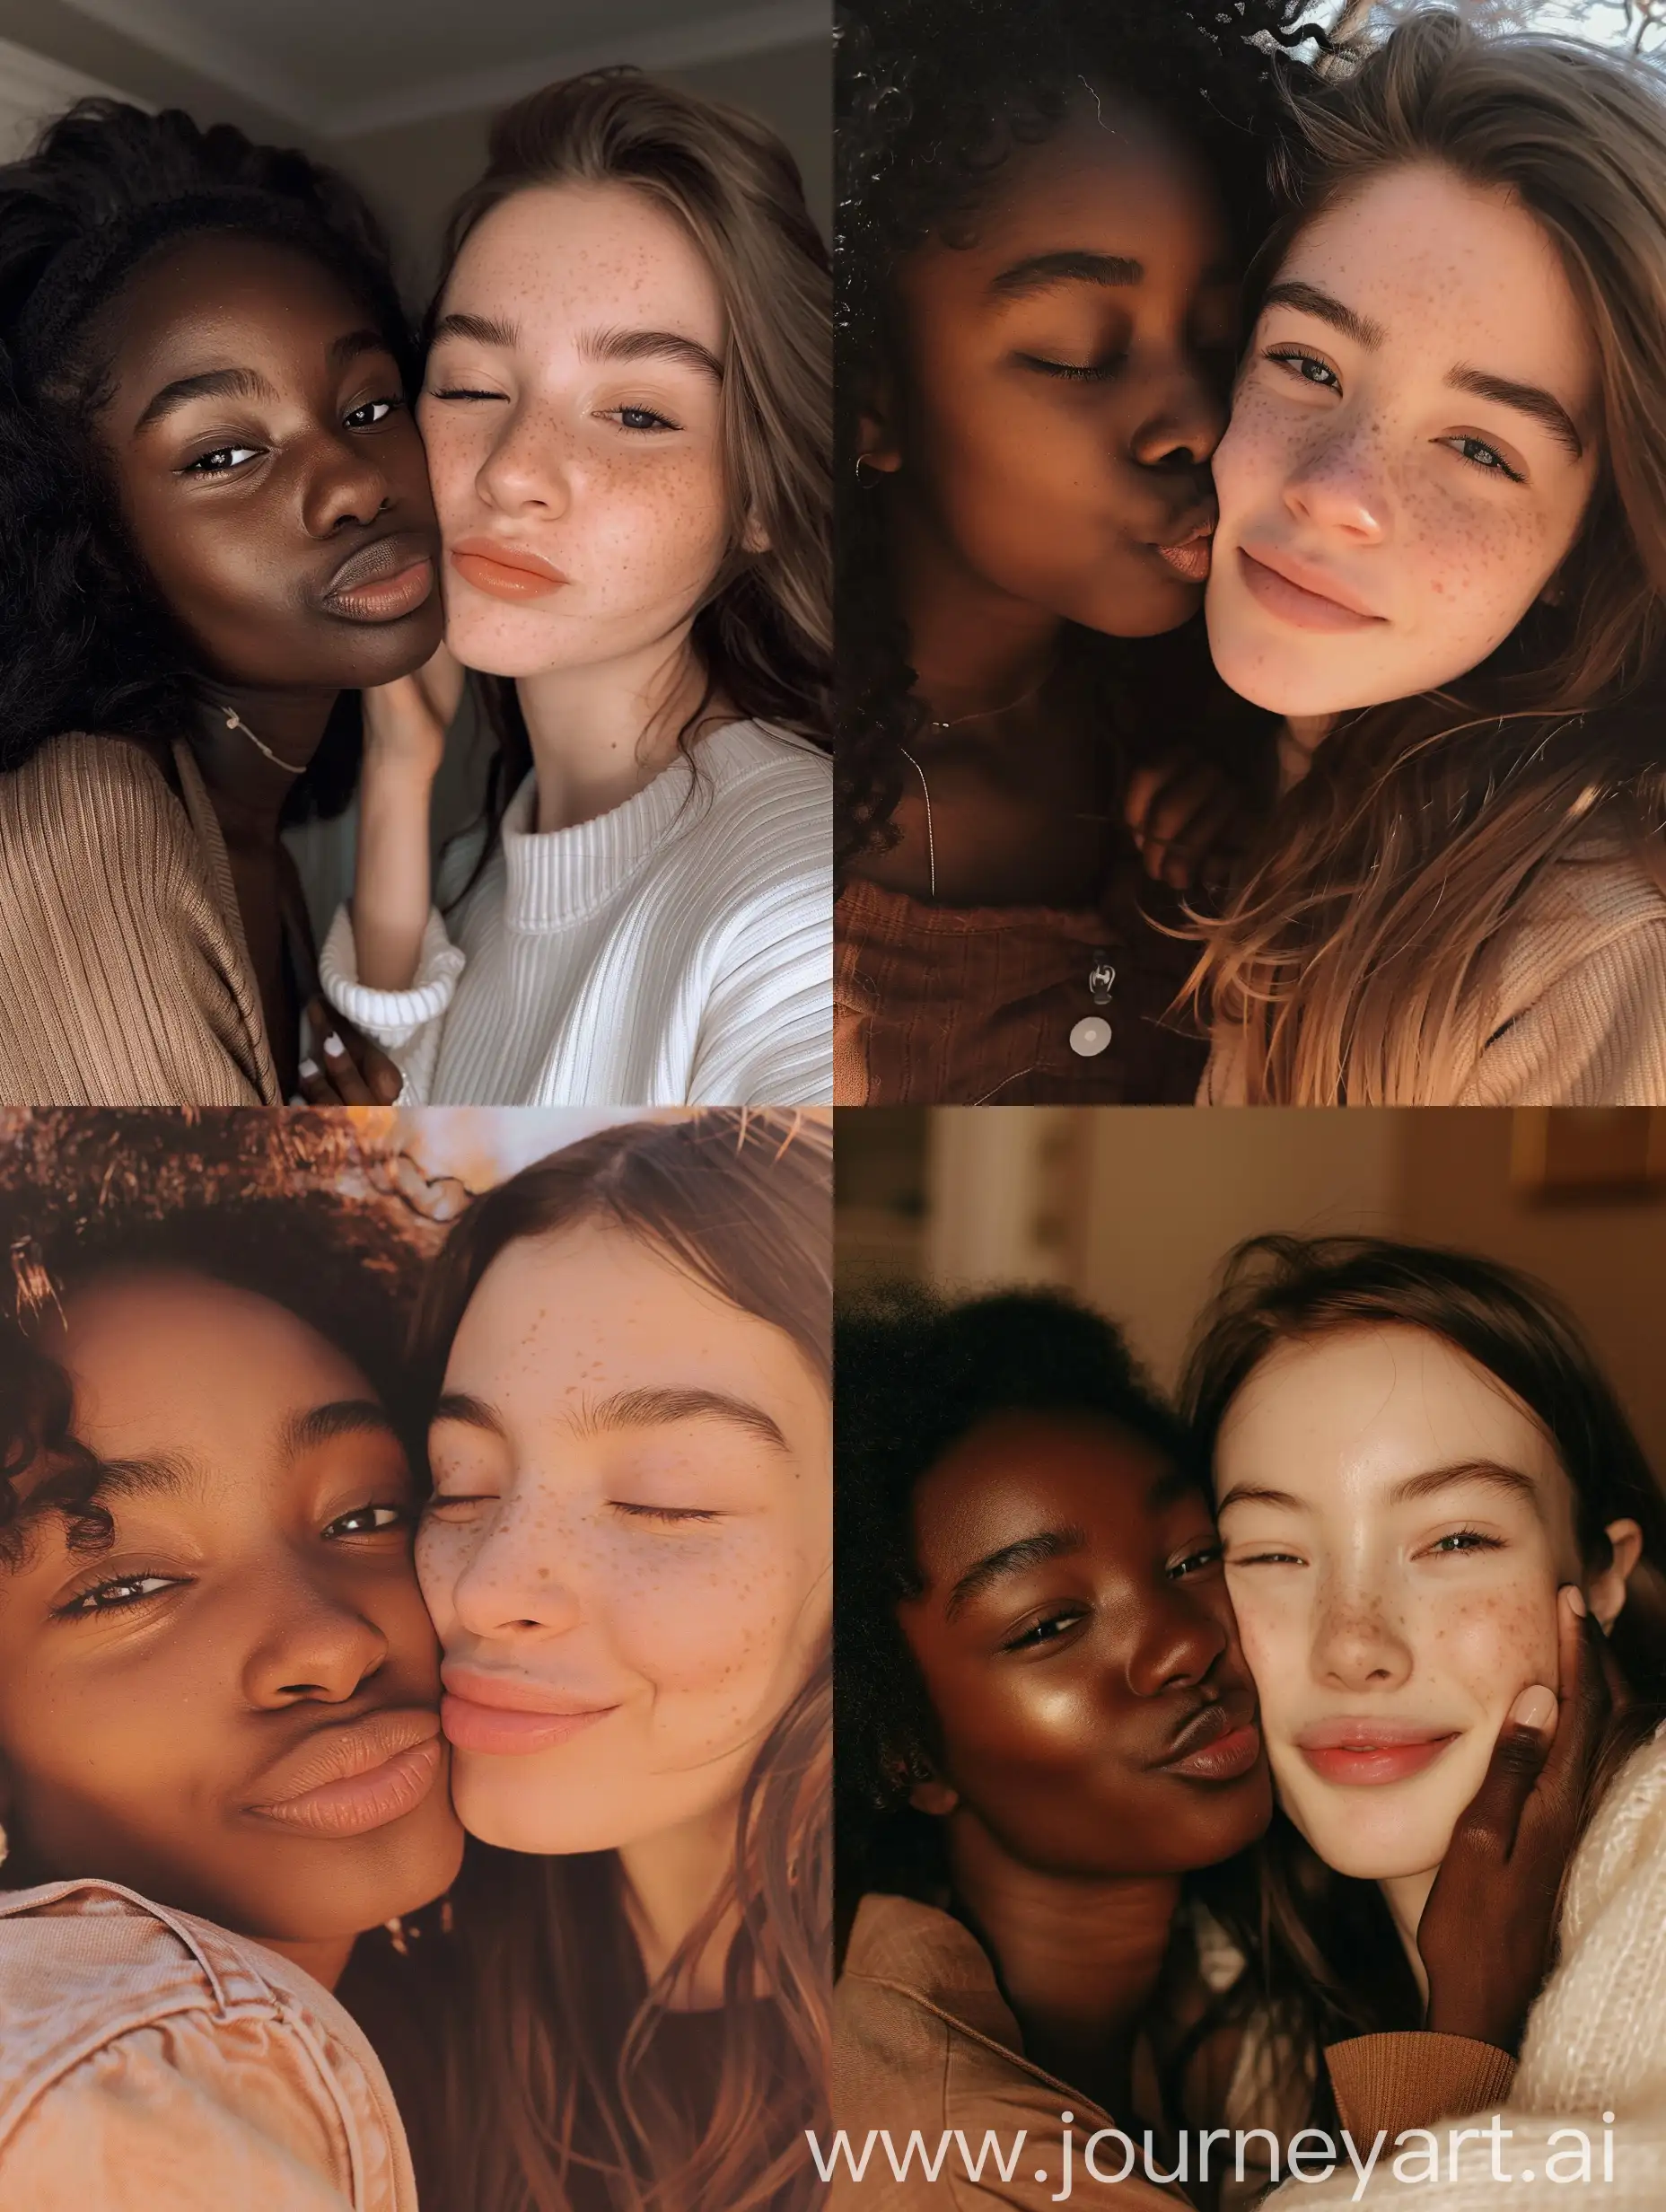 Aesthetic Instagram selfie of two girls, best friends, close up selfie, kissing cheek, adorable, warm brown tones, one black girl, one white girl 